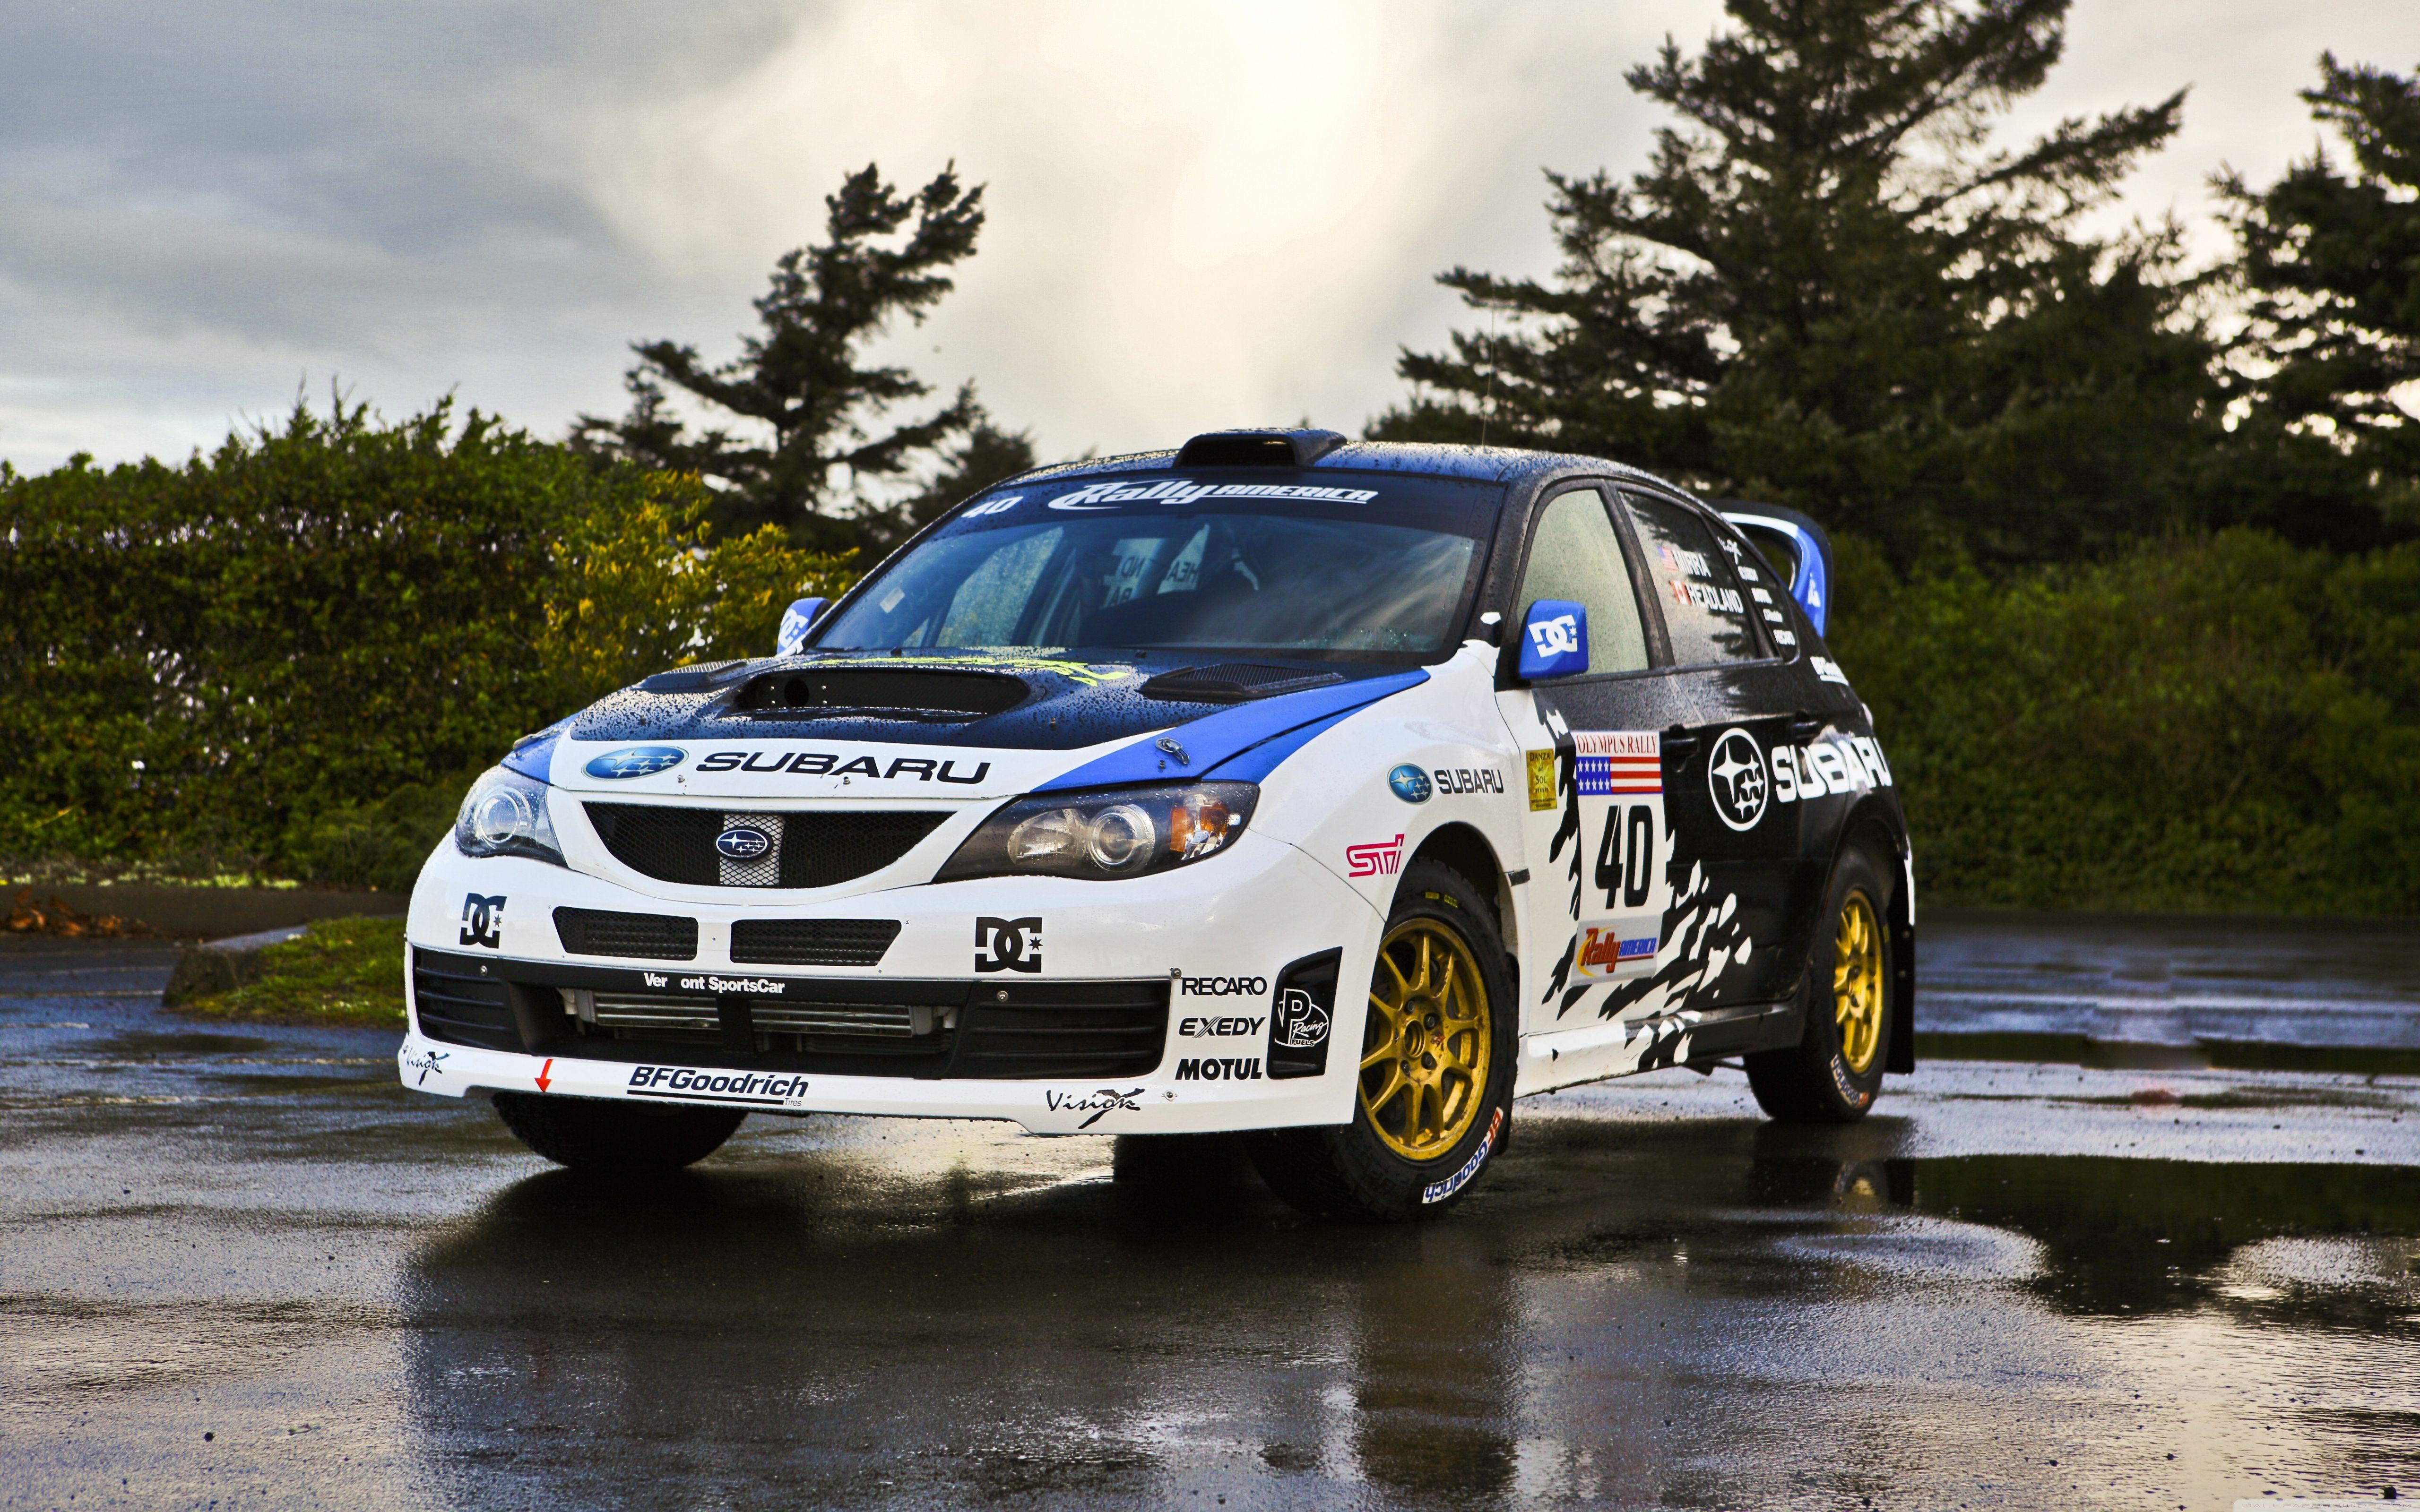 Subaru Rally Car Wallpapers - Top Free Subaru Rally Car ...